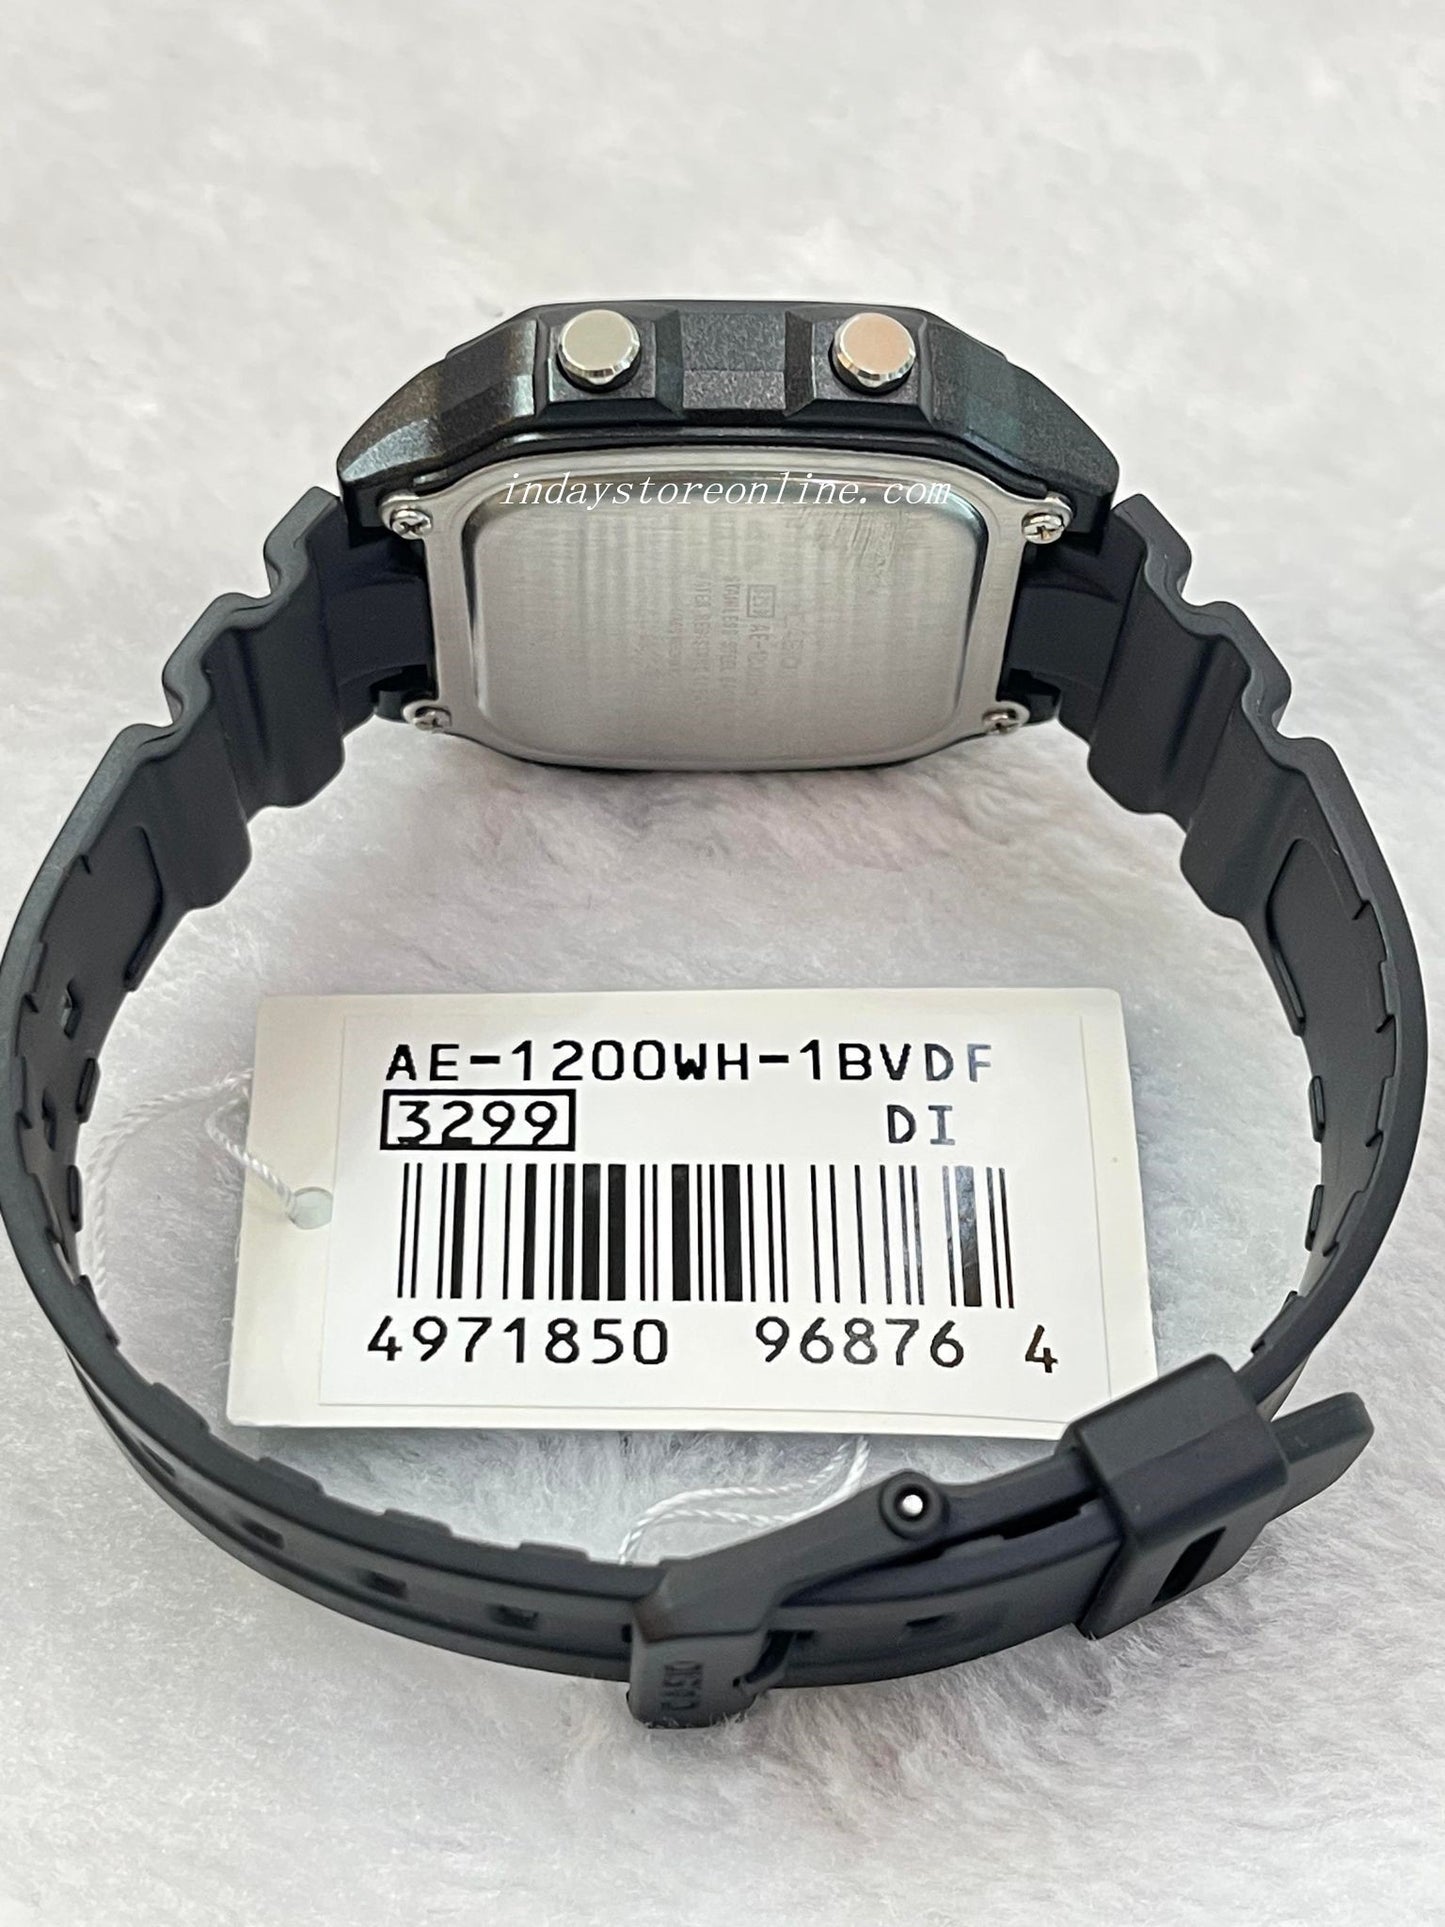 Casio Digital Men's Watch AE-1200WH-1BV